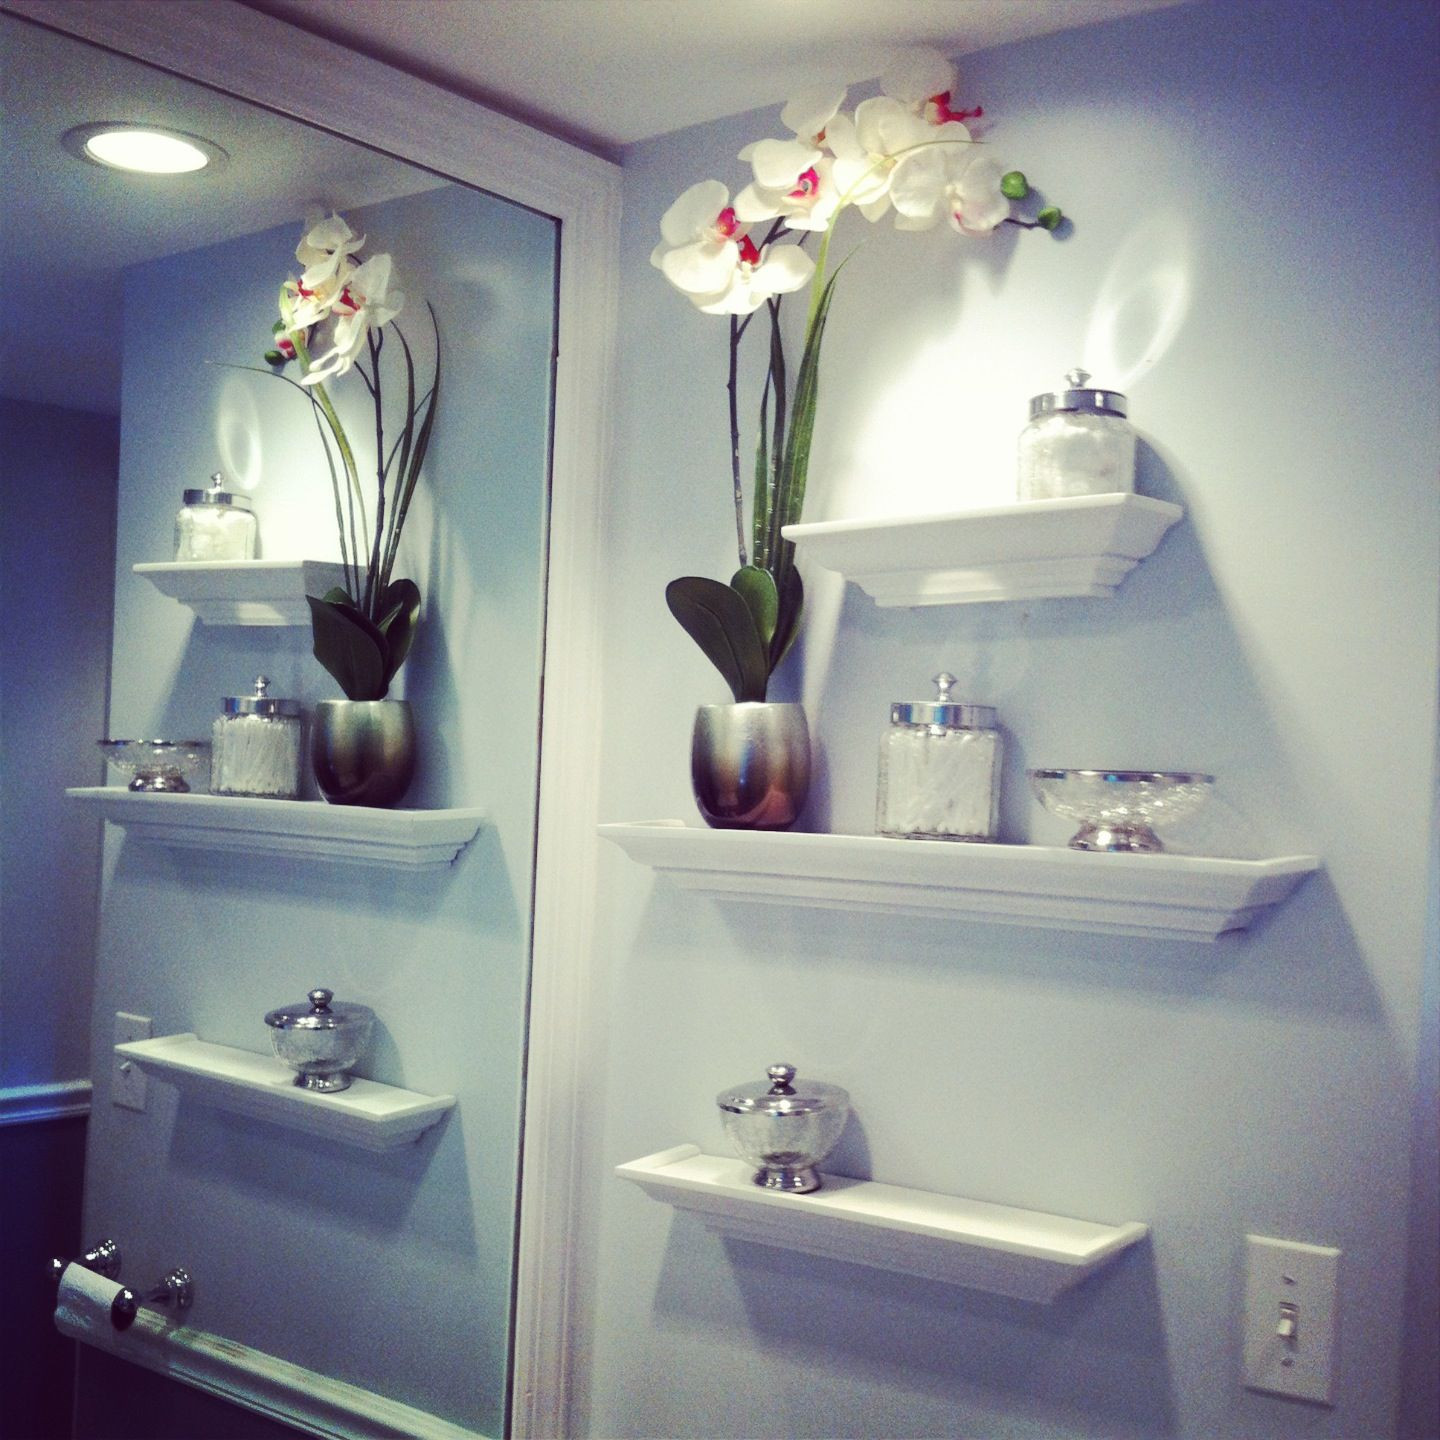 Bathroom Wall Decor Pinterest
 Bathroom Wall decor floating shelves glass jars orchid